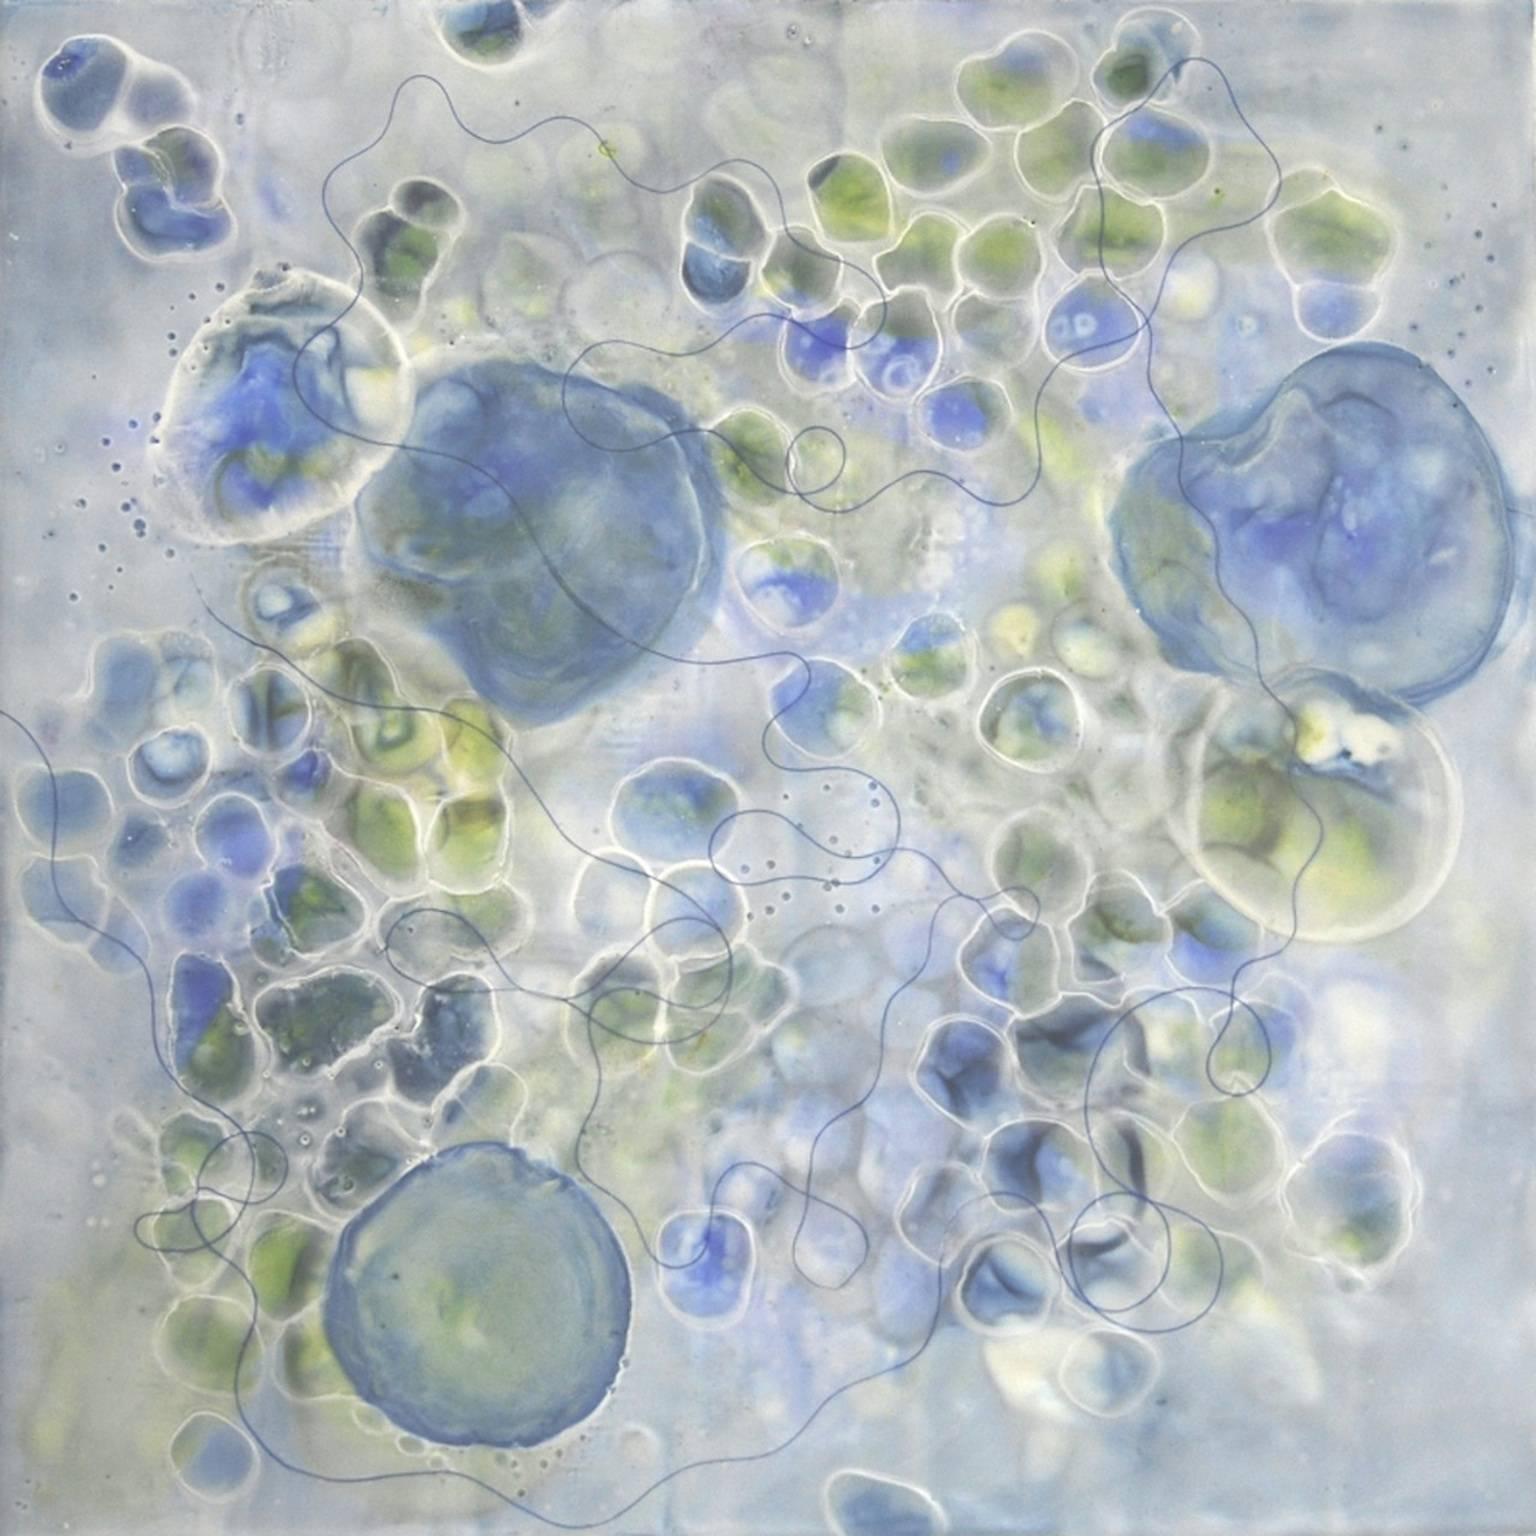 « Bio Flow 3 », microscopique, bleus, verts, blancs, encaustique, pastel, techniques mixtes - Mixed Media Art de Kay Hartung